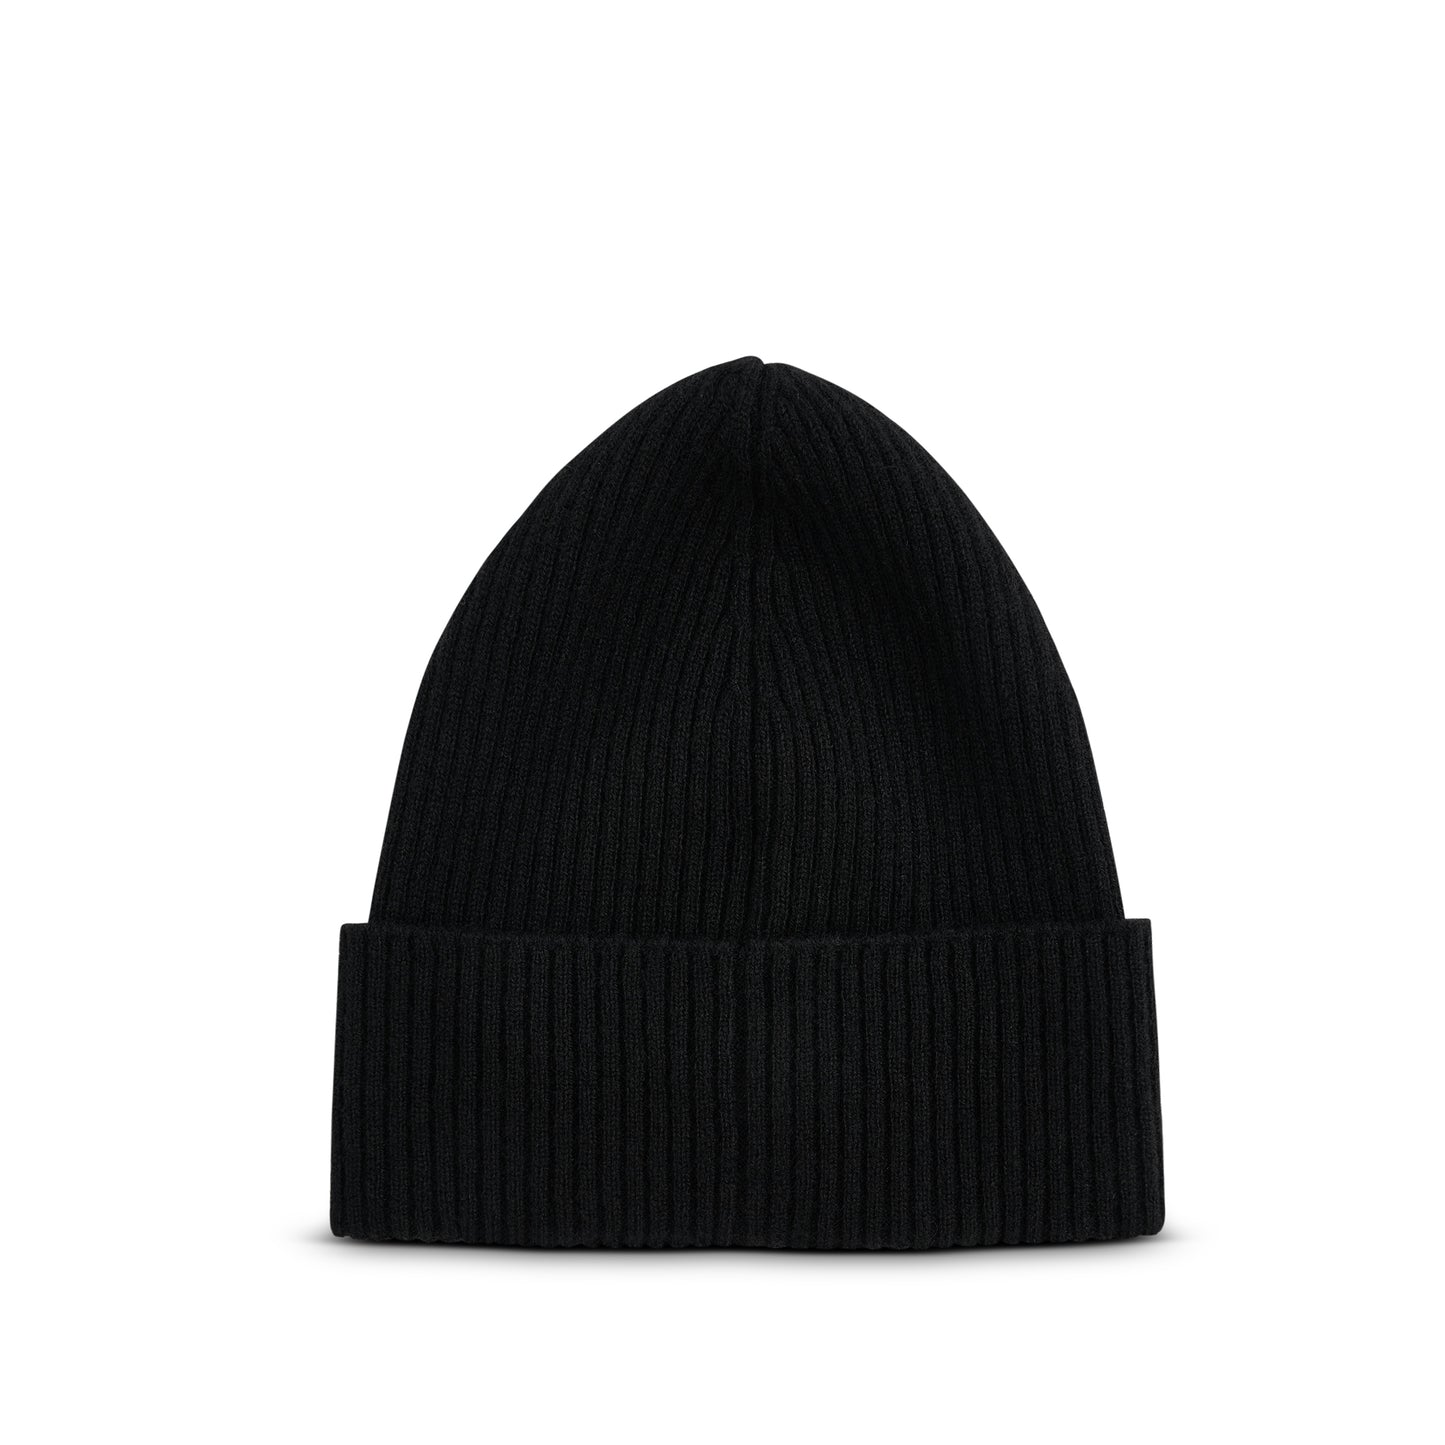 Moncler x Rick Owens Beanie Knit Hat in Black